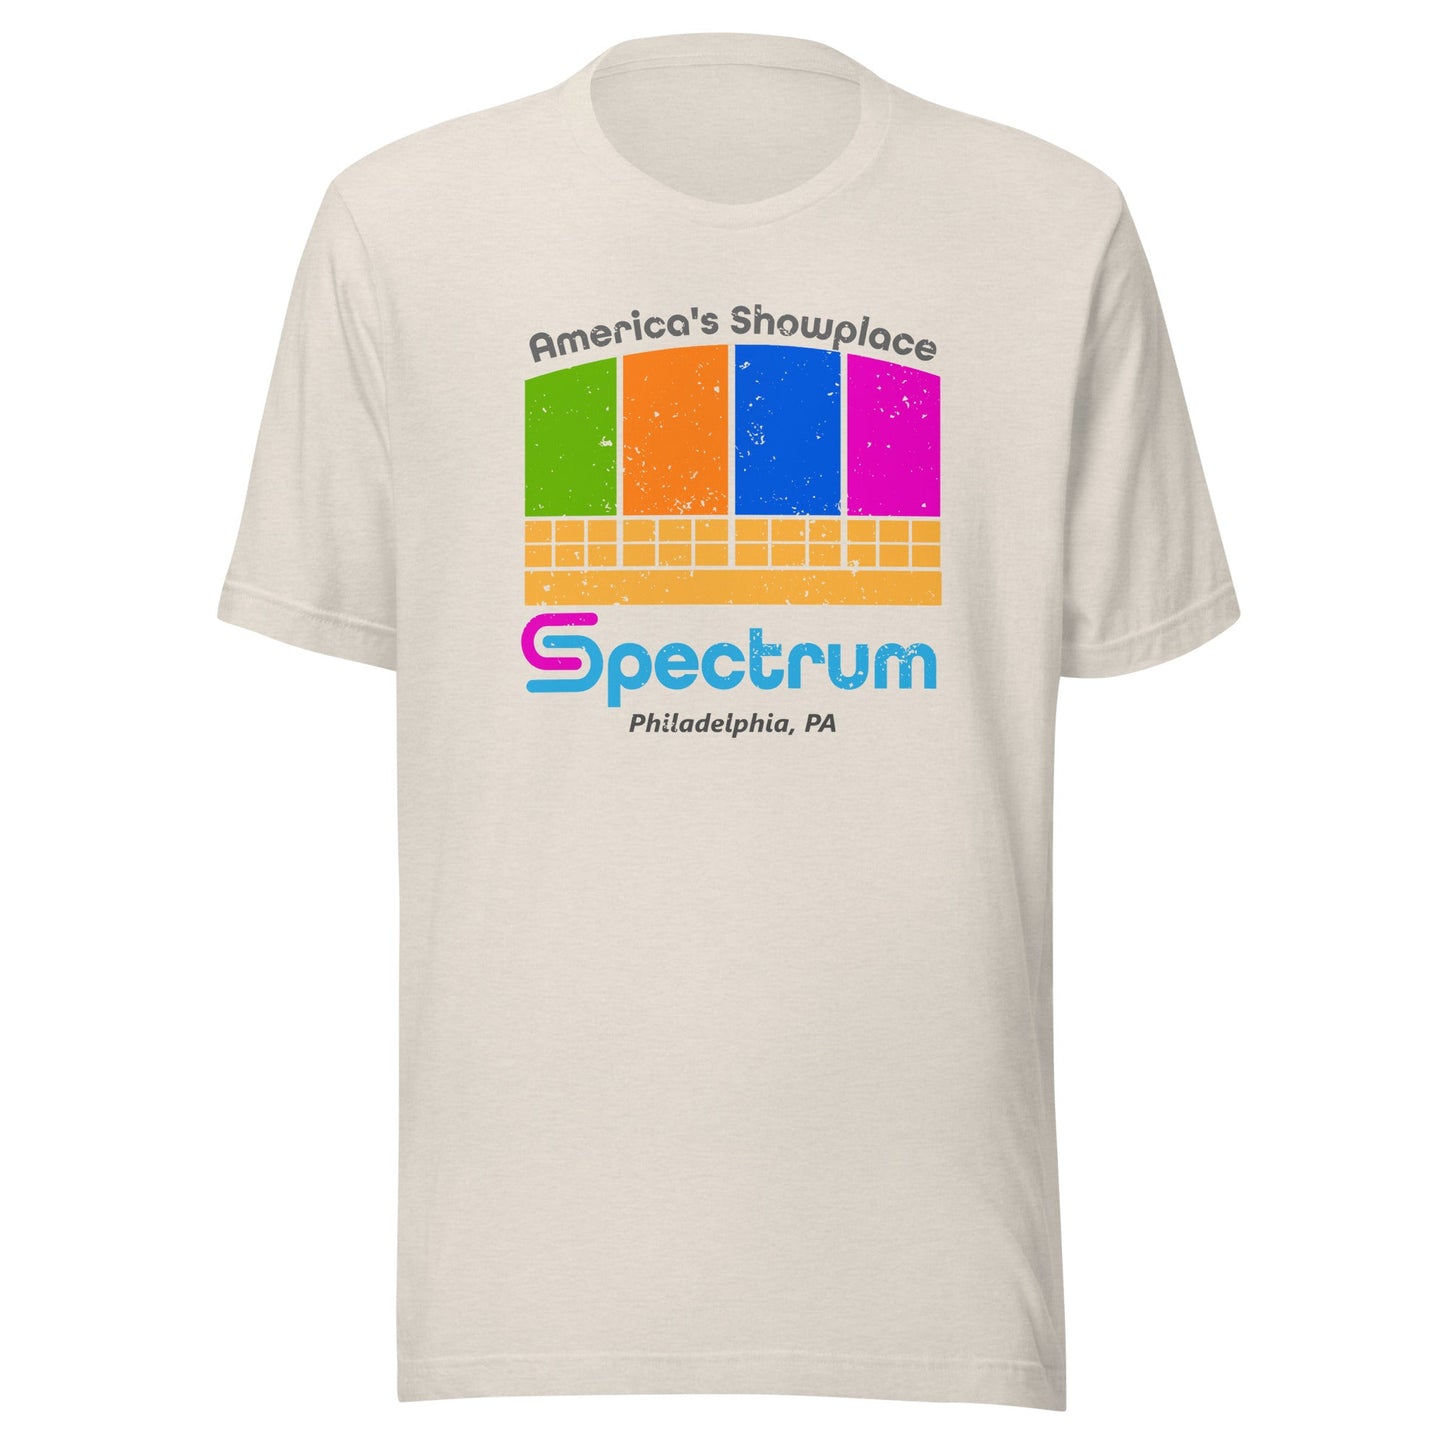 Spectrum Arena T-Shirt - Philadelphia, PA | Retro 70s Sports & Music Venue Tee